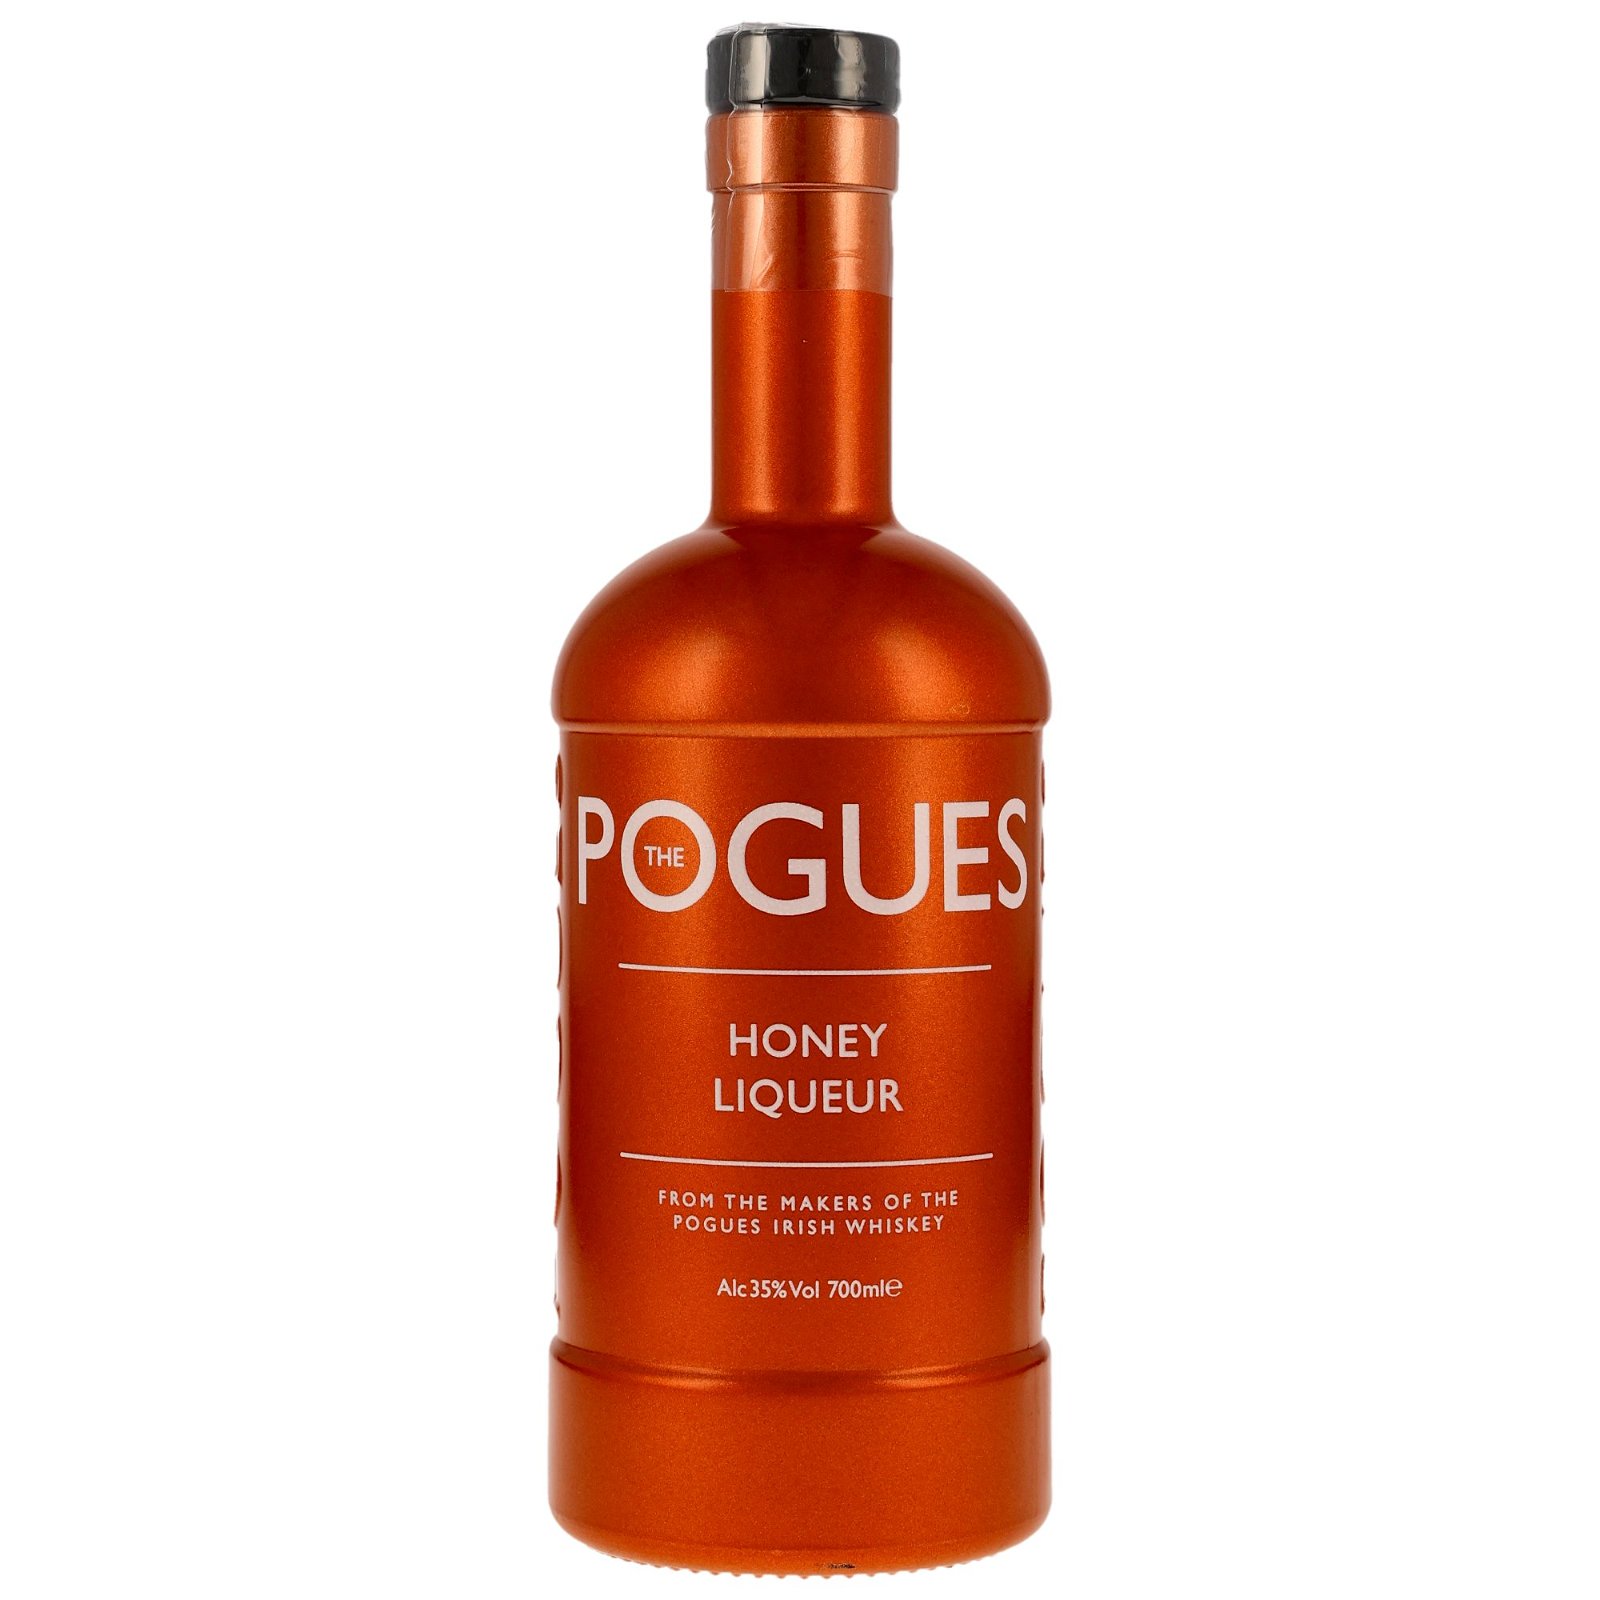 The Pogues Honey Liqueur